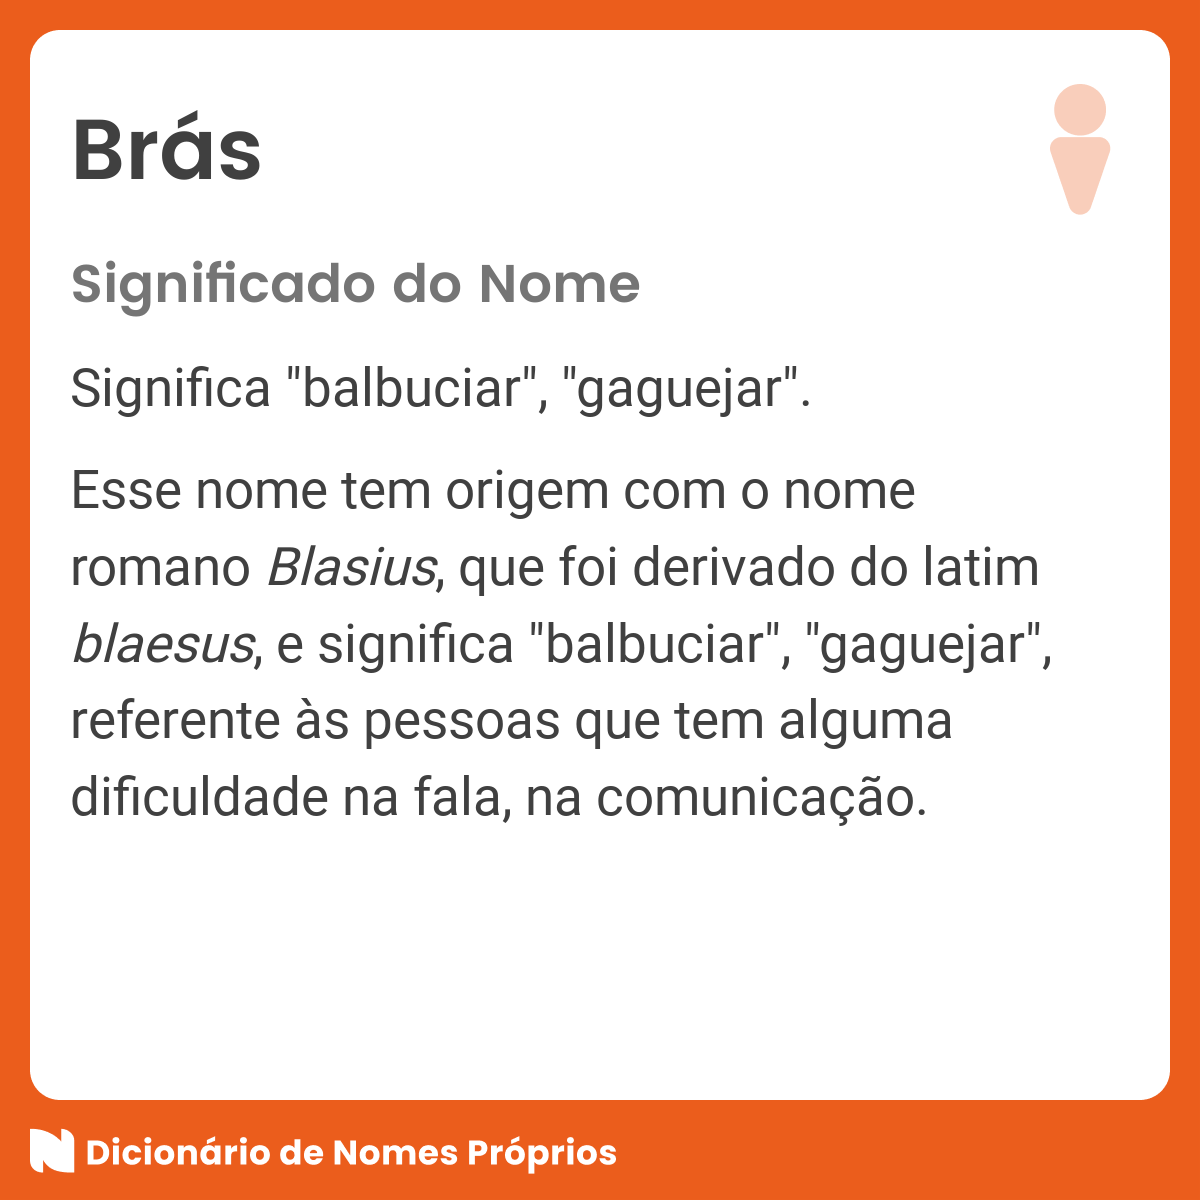 https://static.dicionariodenomesproprios.com.br/upload/facebook/b/bras-1x1.png